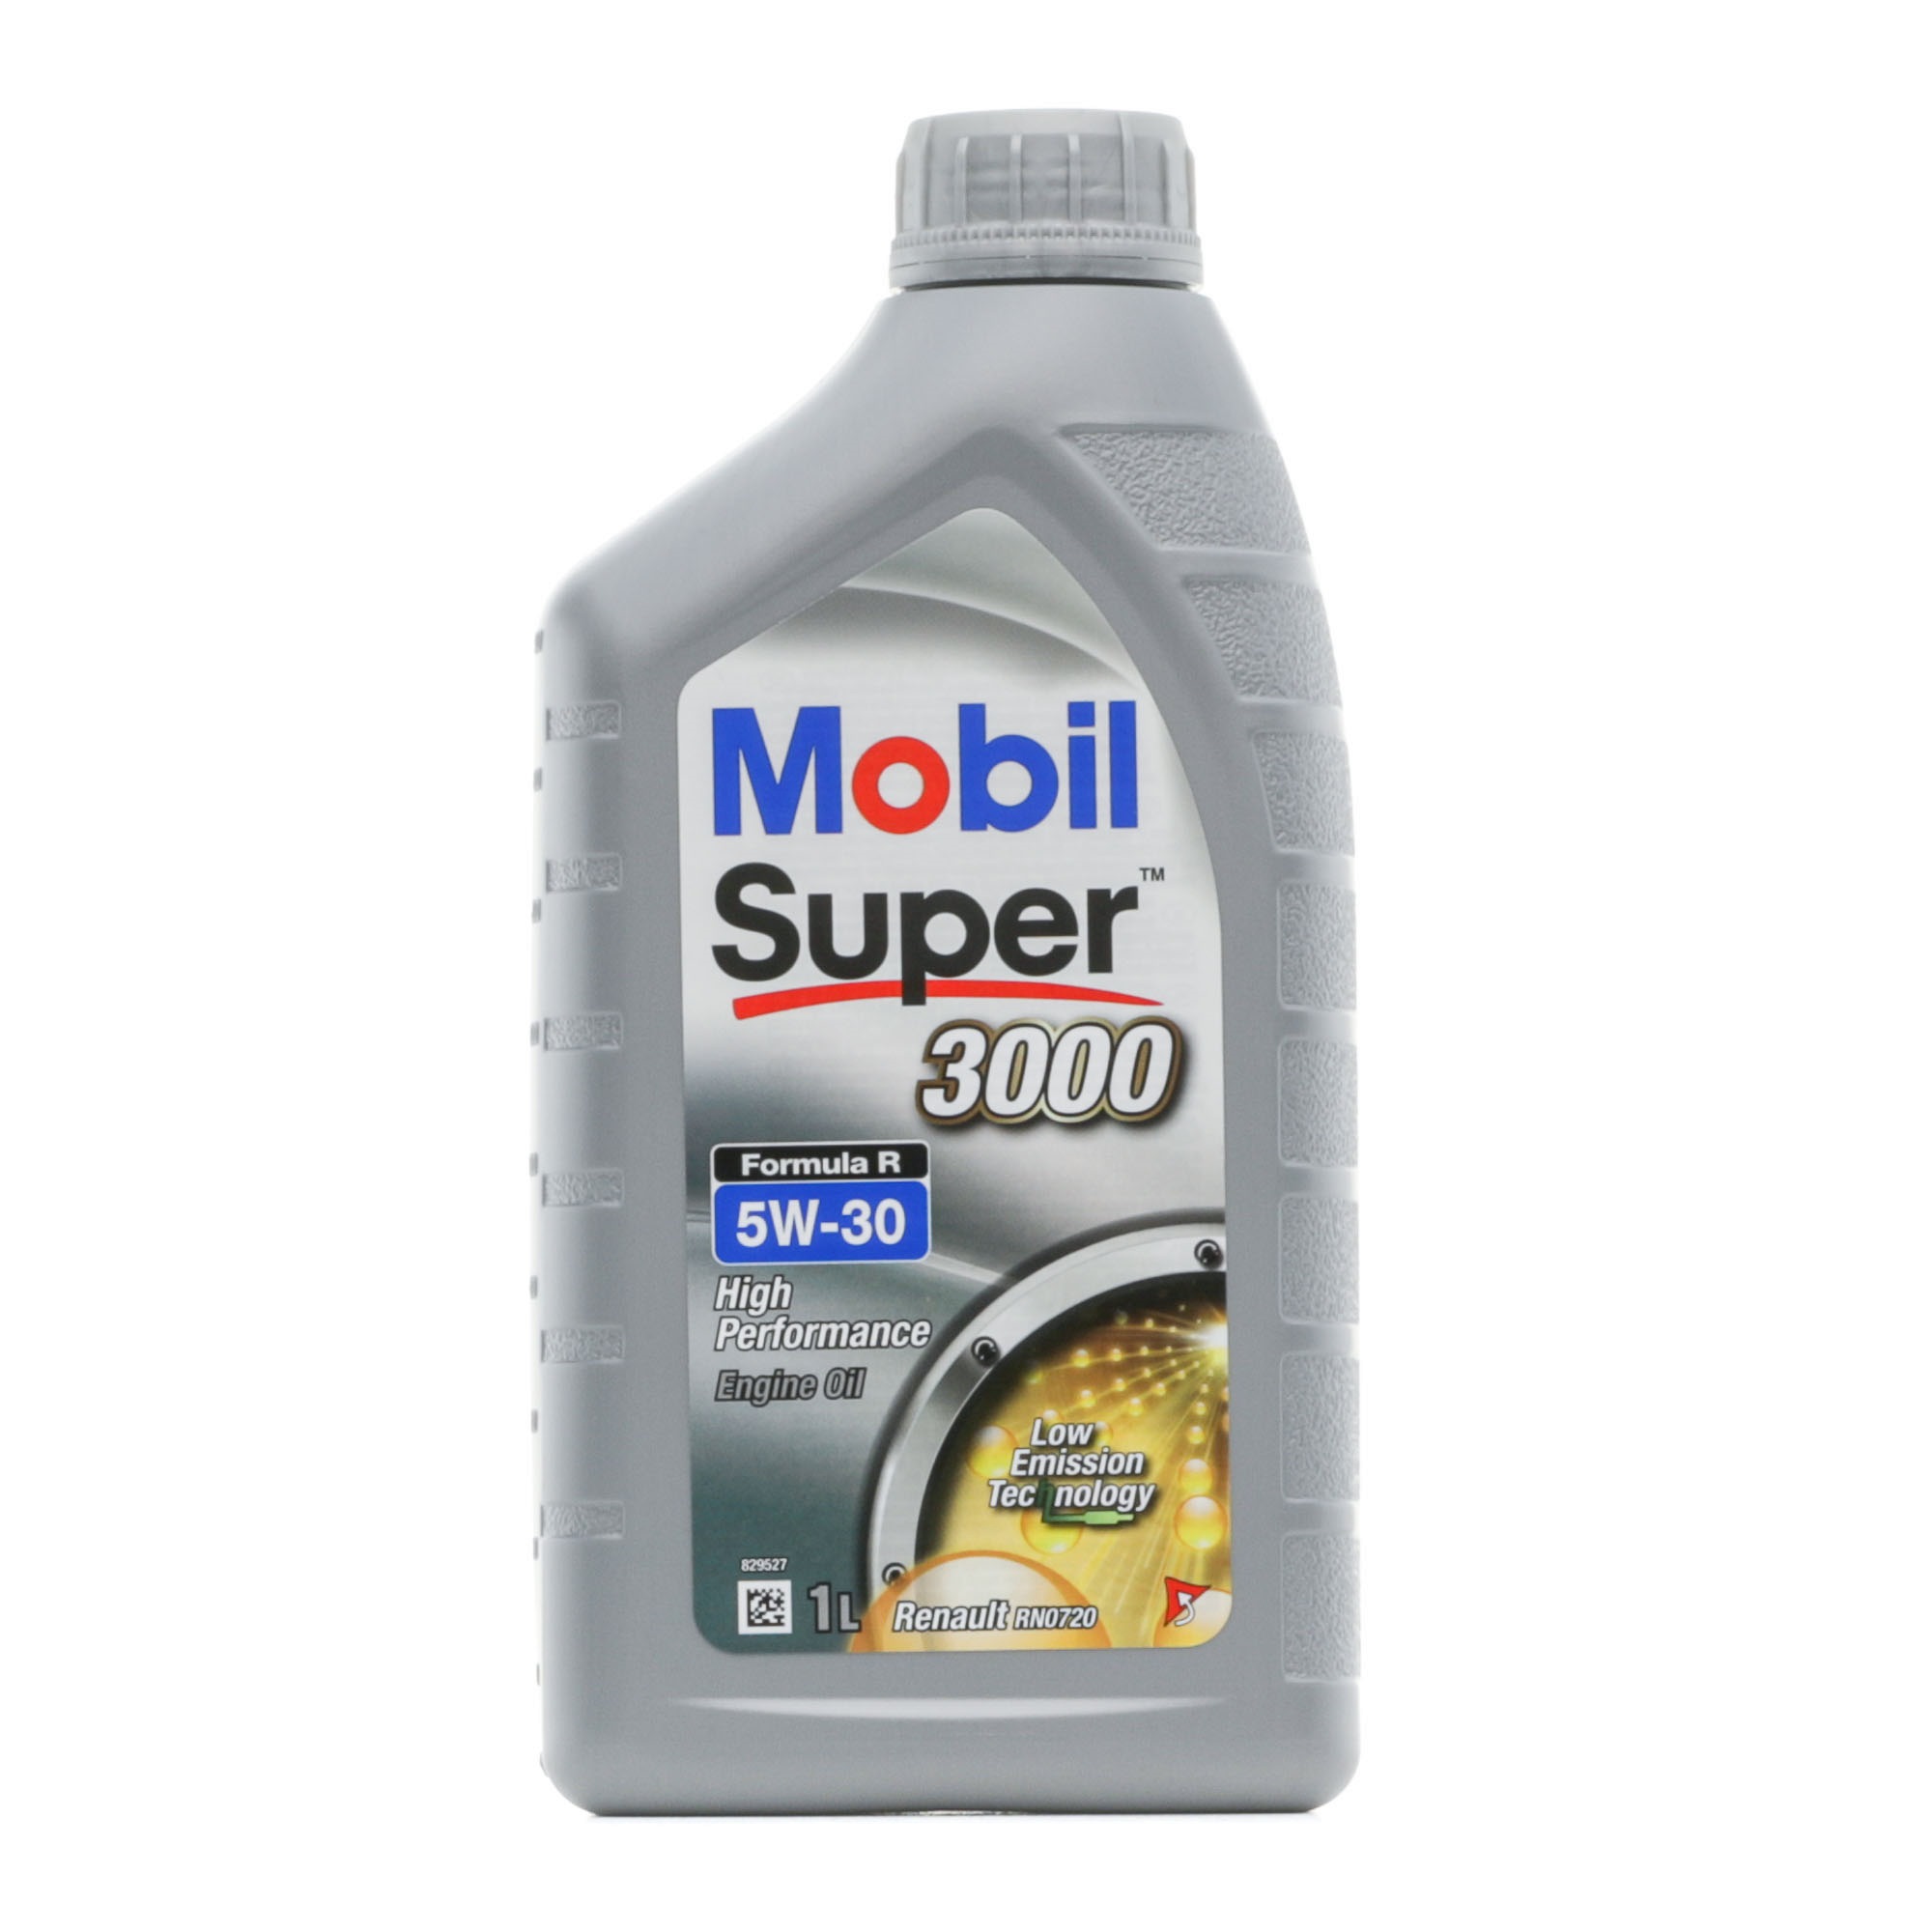 Buy Motor oil MOBIL petrol 150886 Super, 3000 Formula R 5W-30, 1l, Synthetic Oil